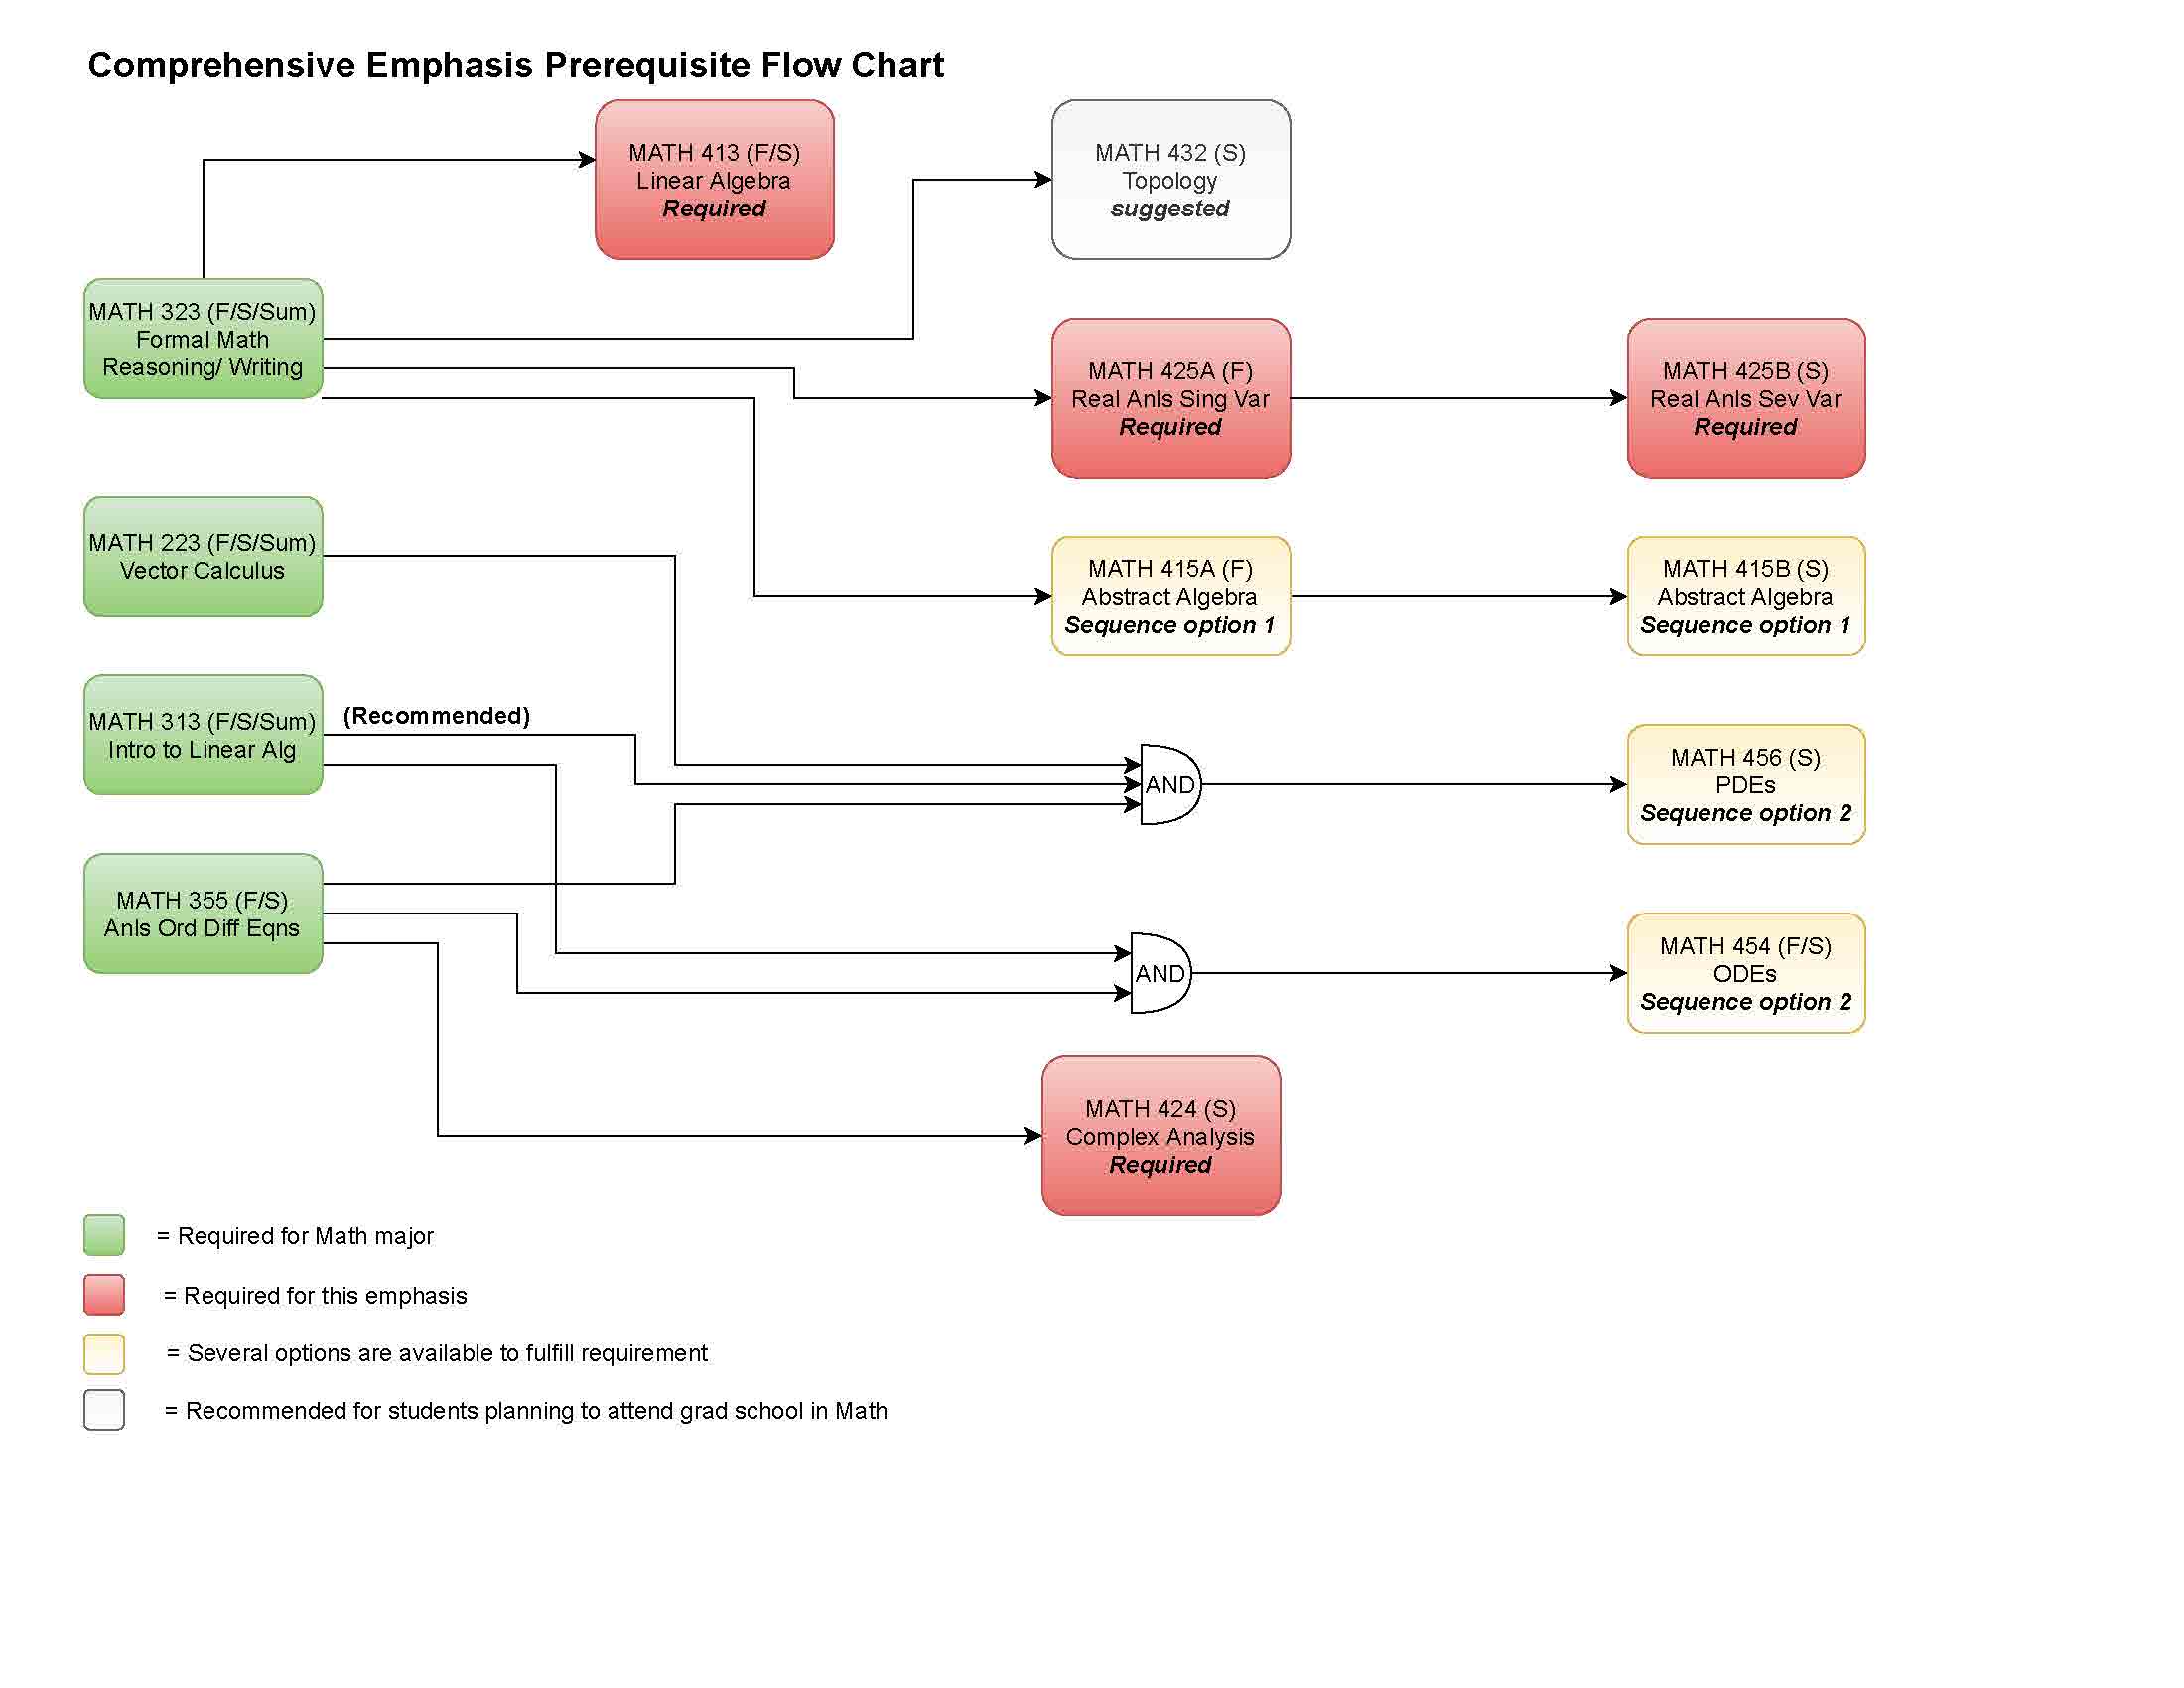 prerequisite flowchart for comprehensive emphasis (click image for downloadable PDF)